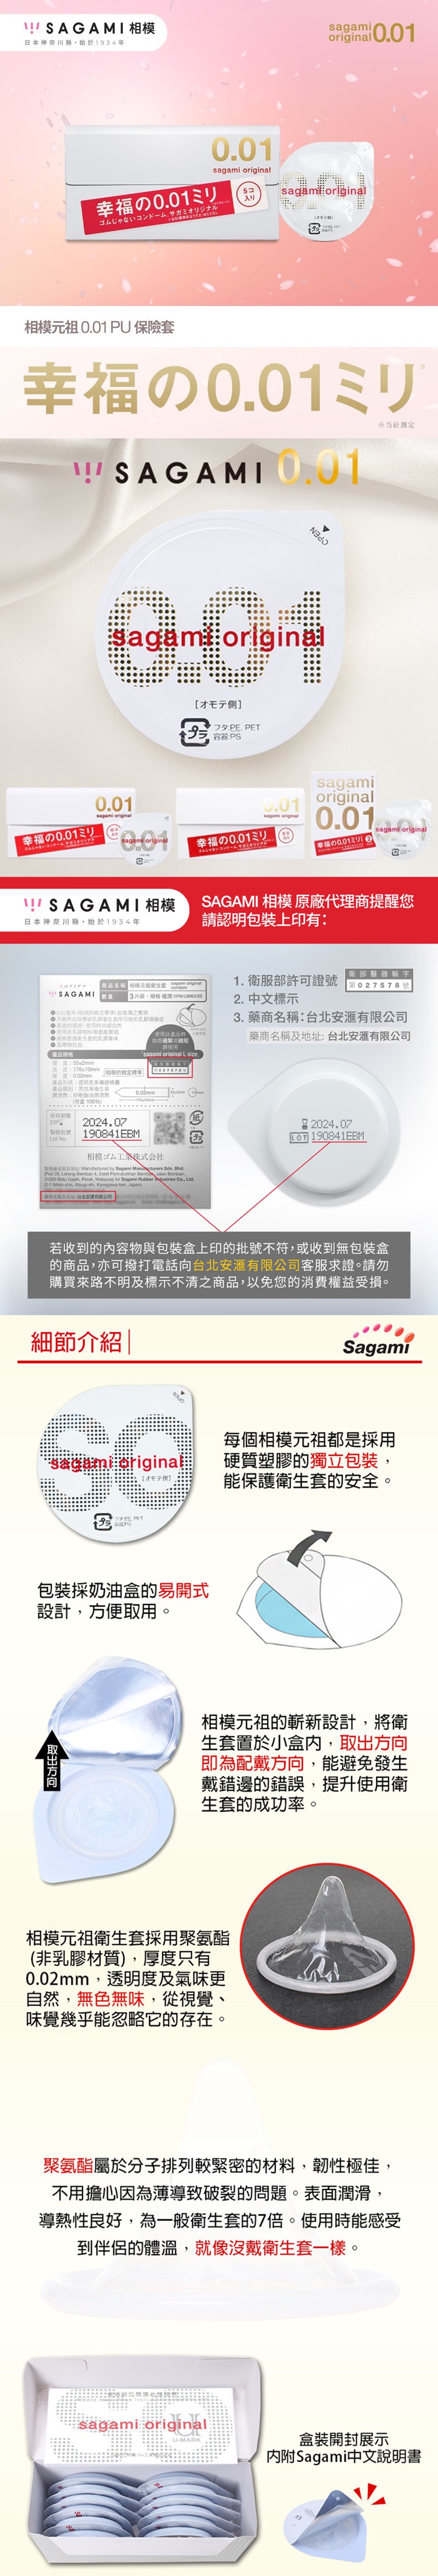 sagami 相模元祖 001 極致薄 55mm 保險套 20入裝 長條圖 800X800.jpg